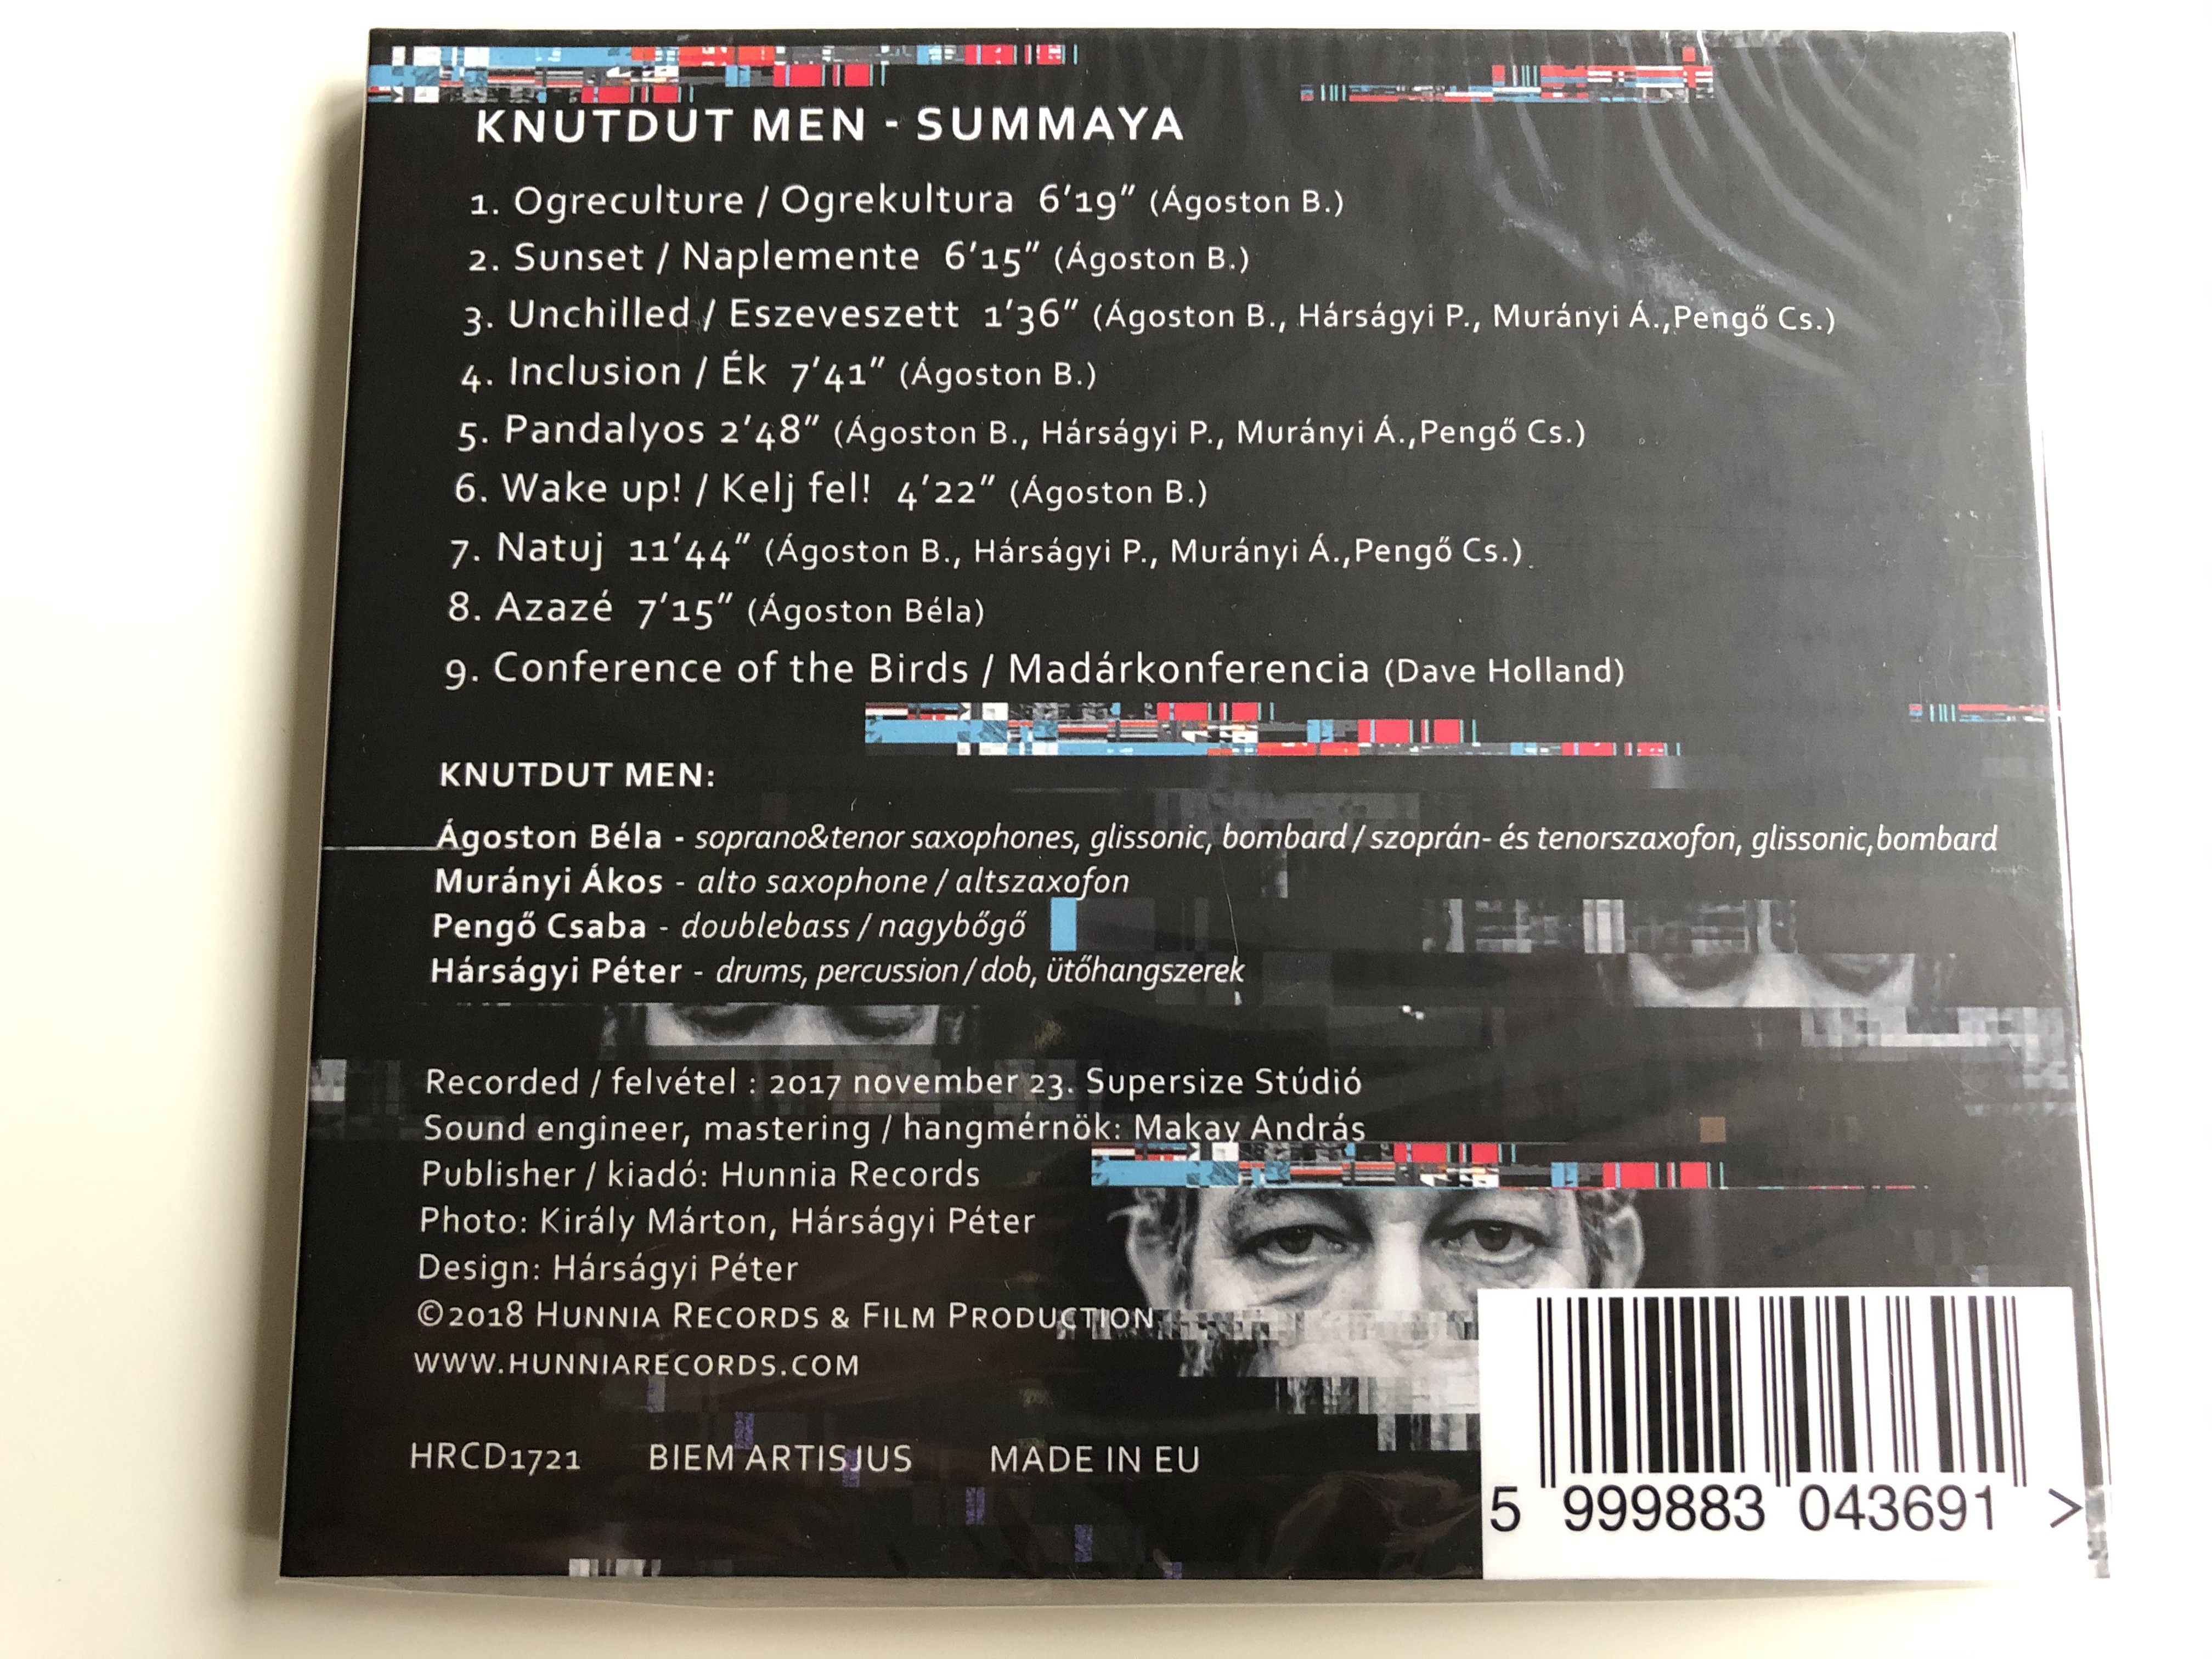 knutdut-men-summaya-hunnia-records-audio-cd-2018-hrcd1721-2-.jpg